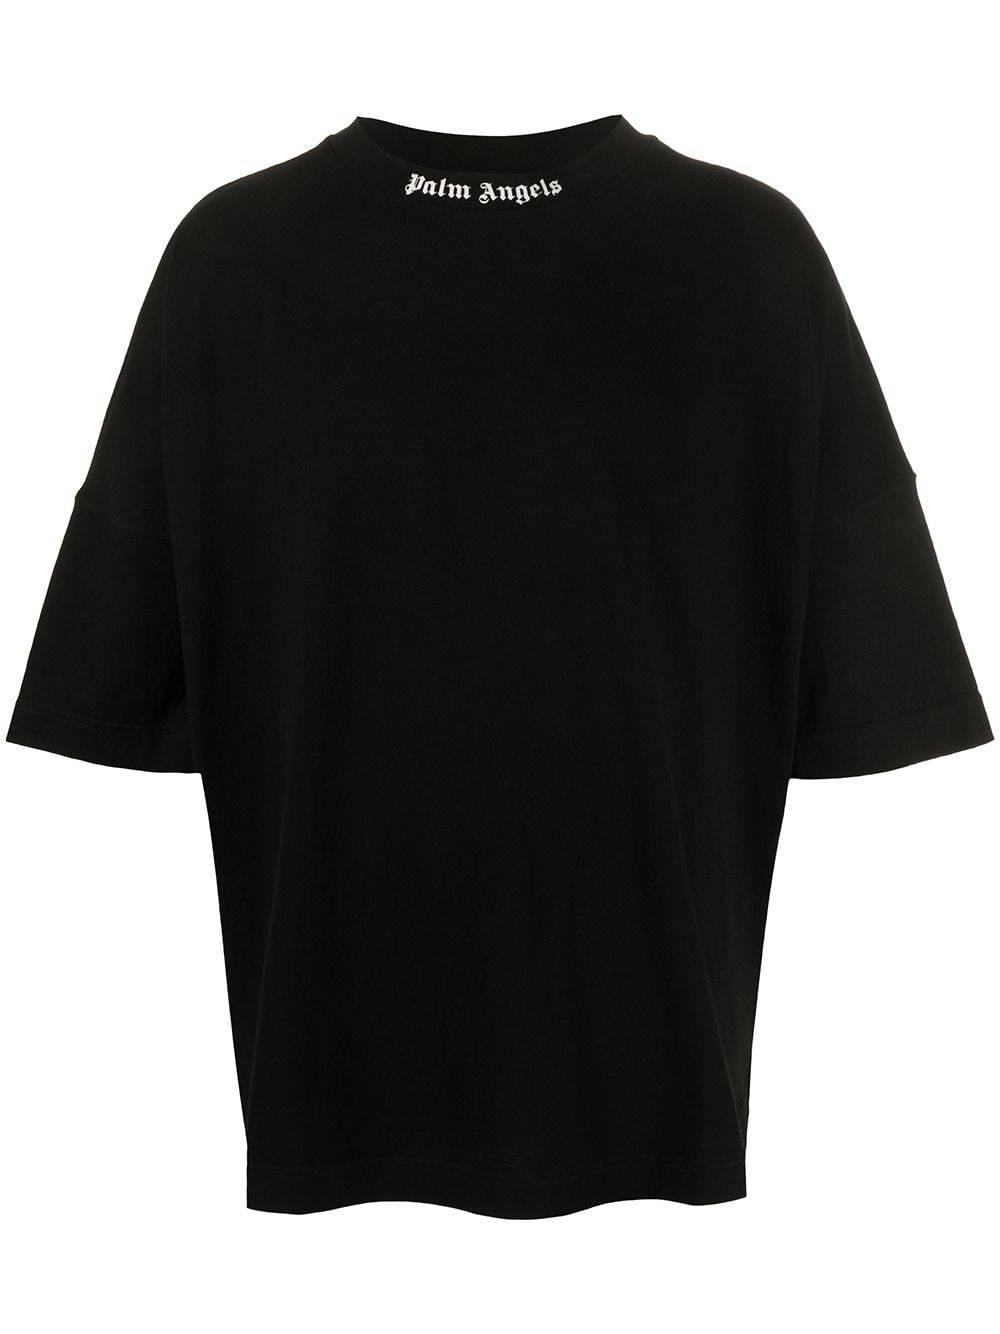 Palm Angels Black Classic Logo Print T-Shirt - Centurion Clothing